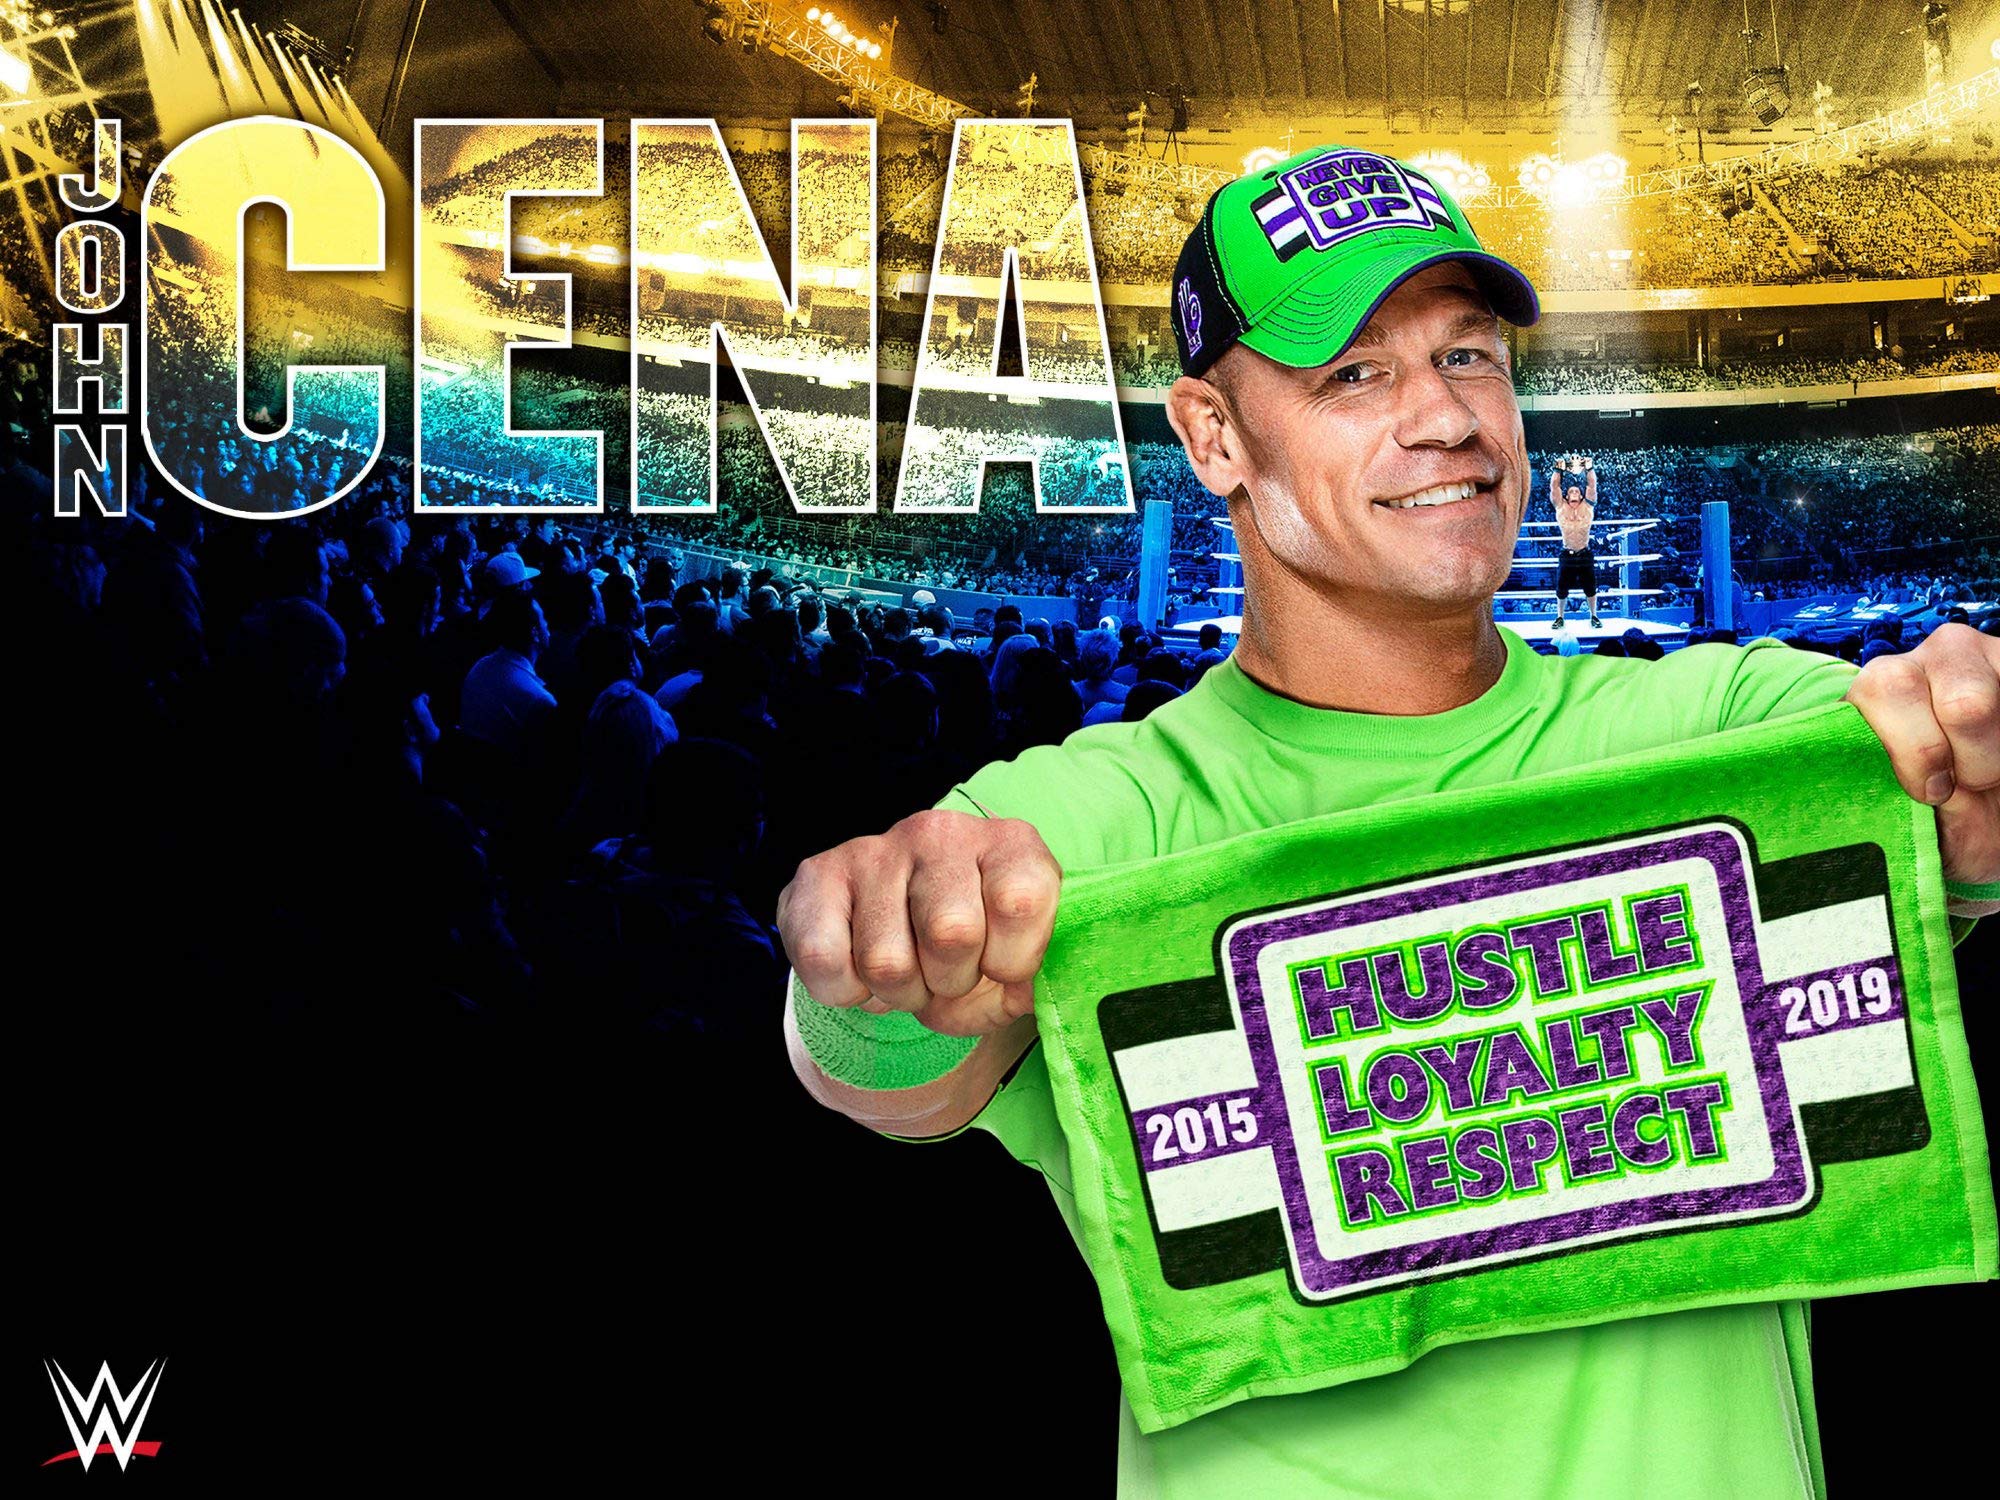 WWE: John Cena: Hustle, Loyalty, Respect. Prime